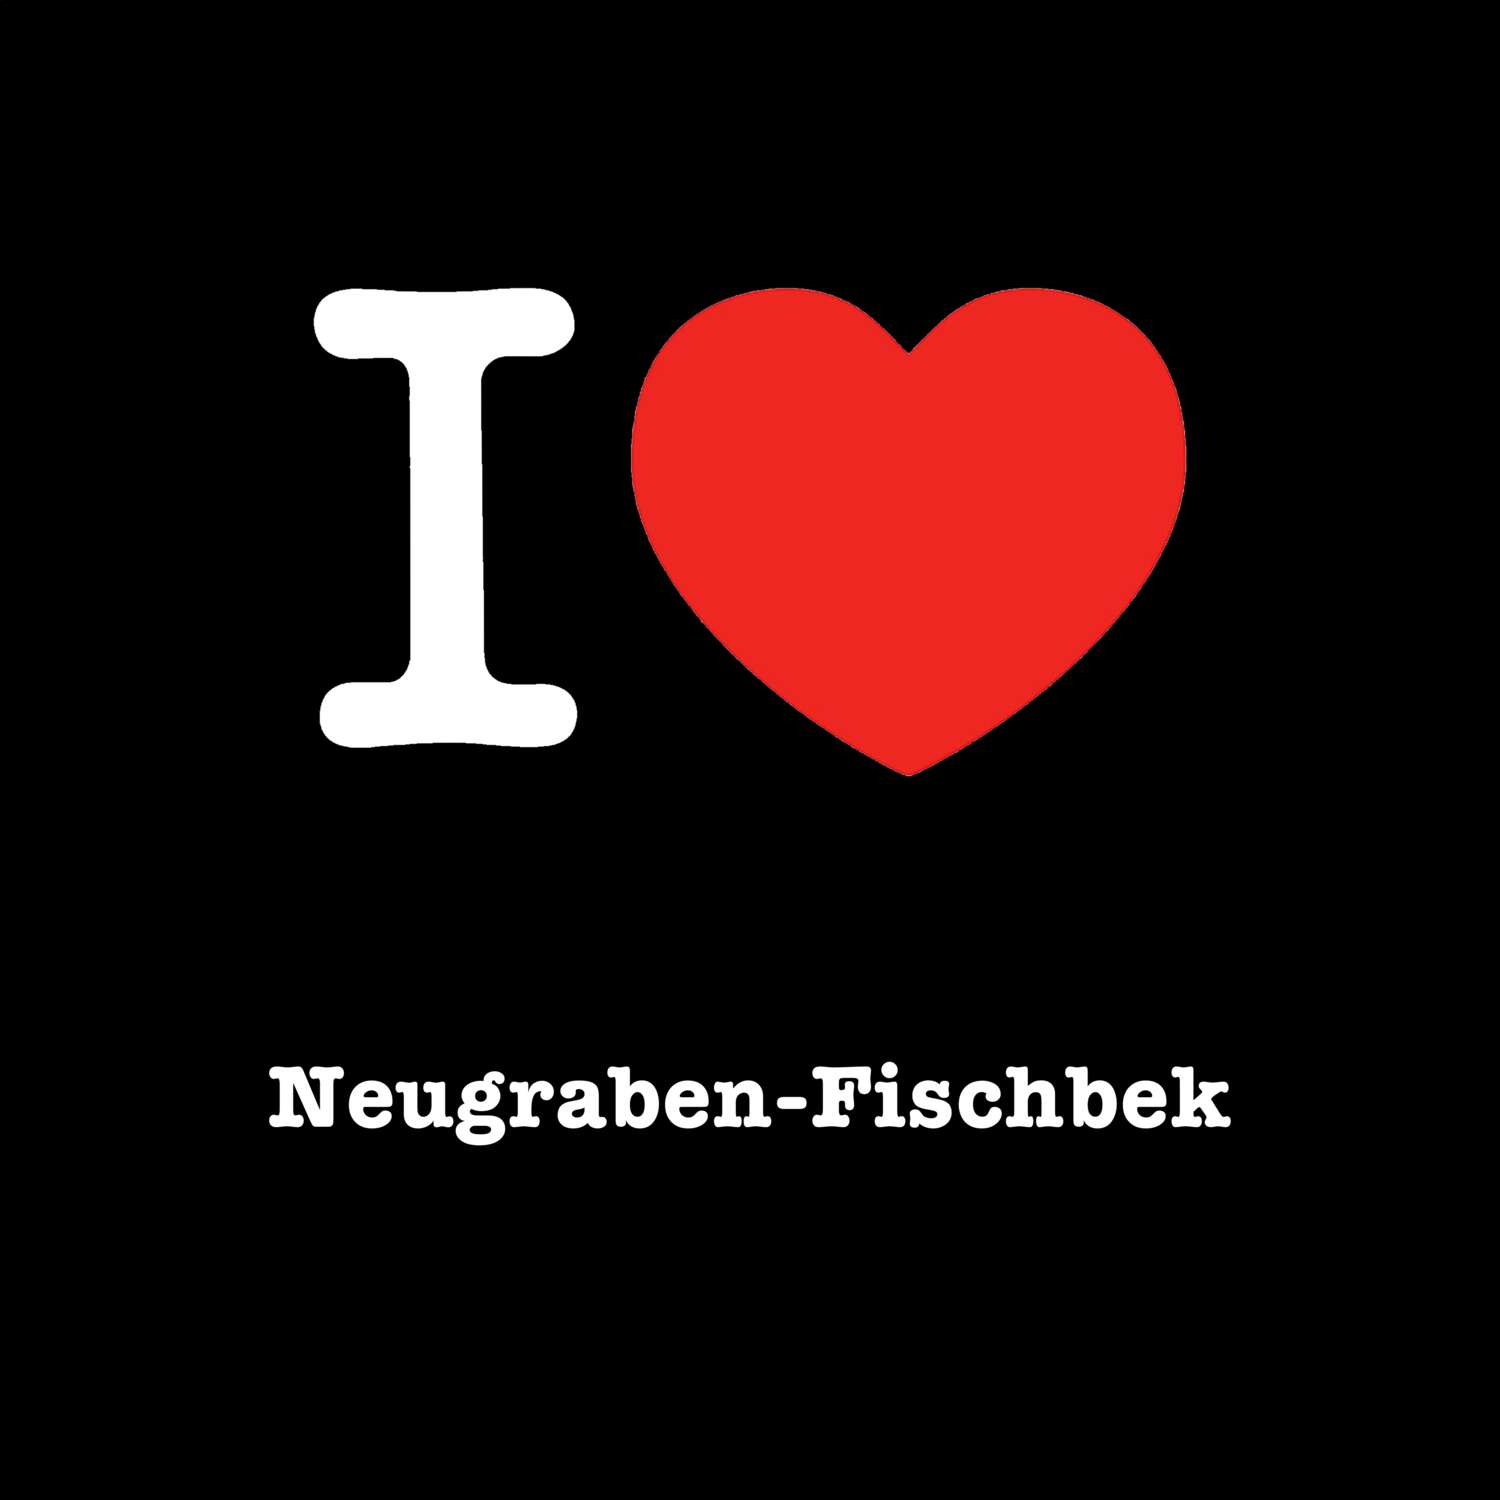 Neugraben-Fischbek T-Shirt »I love«